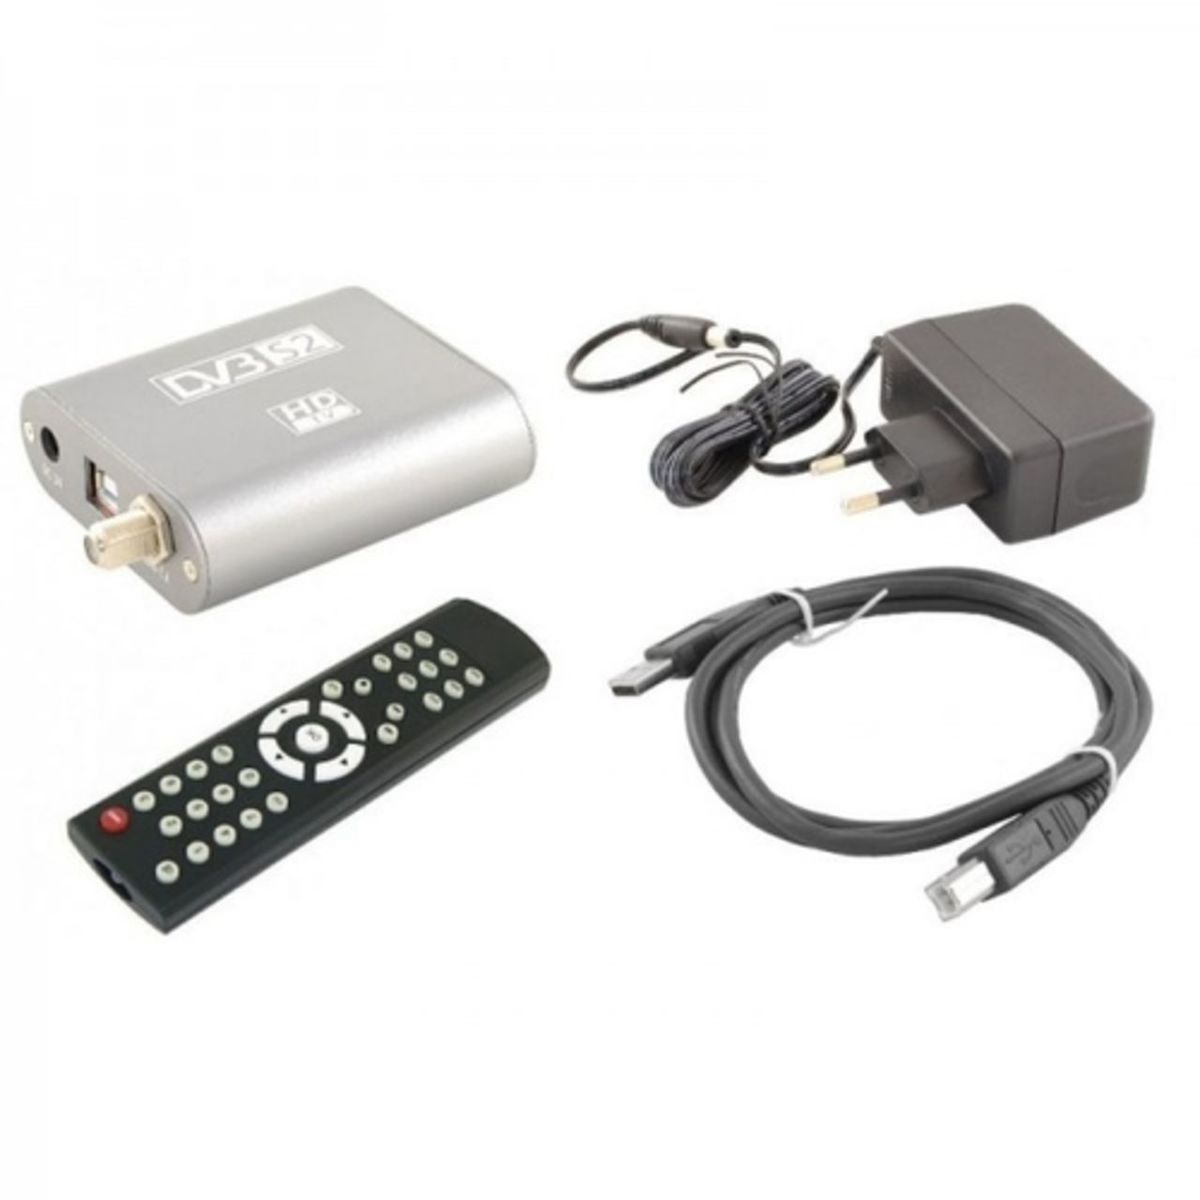 DVBSky S960 DVB-S2 USB externí satelitní tuner